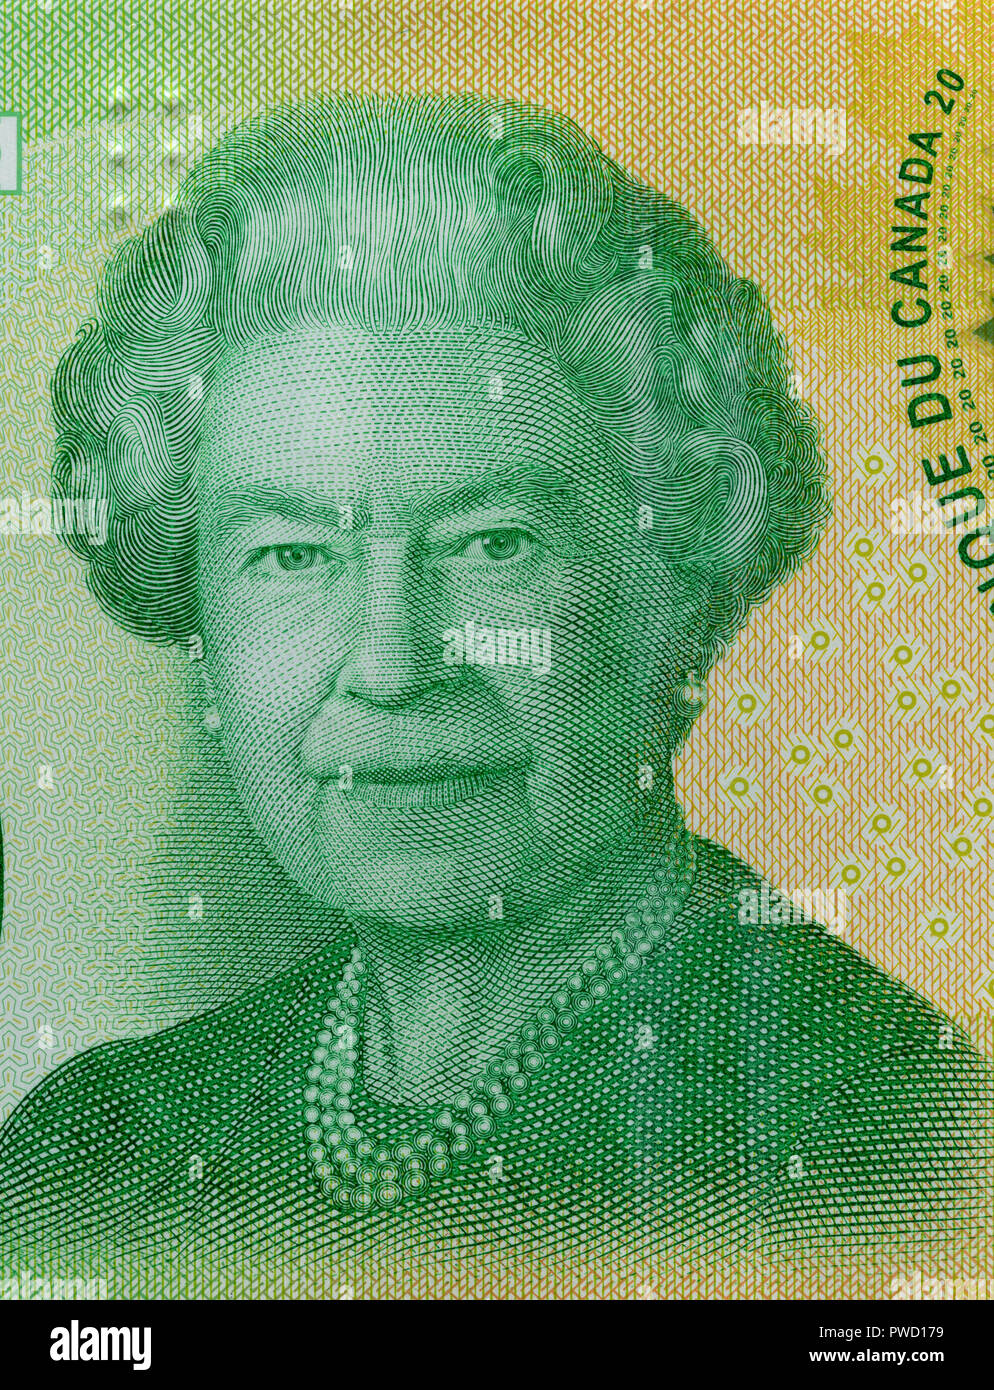 Portrait of Queen Elizabeth II from 20 dollars banknote, Canada, 2012 Stock Photo